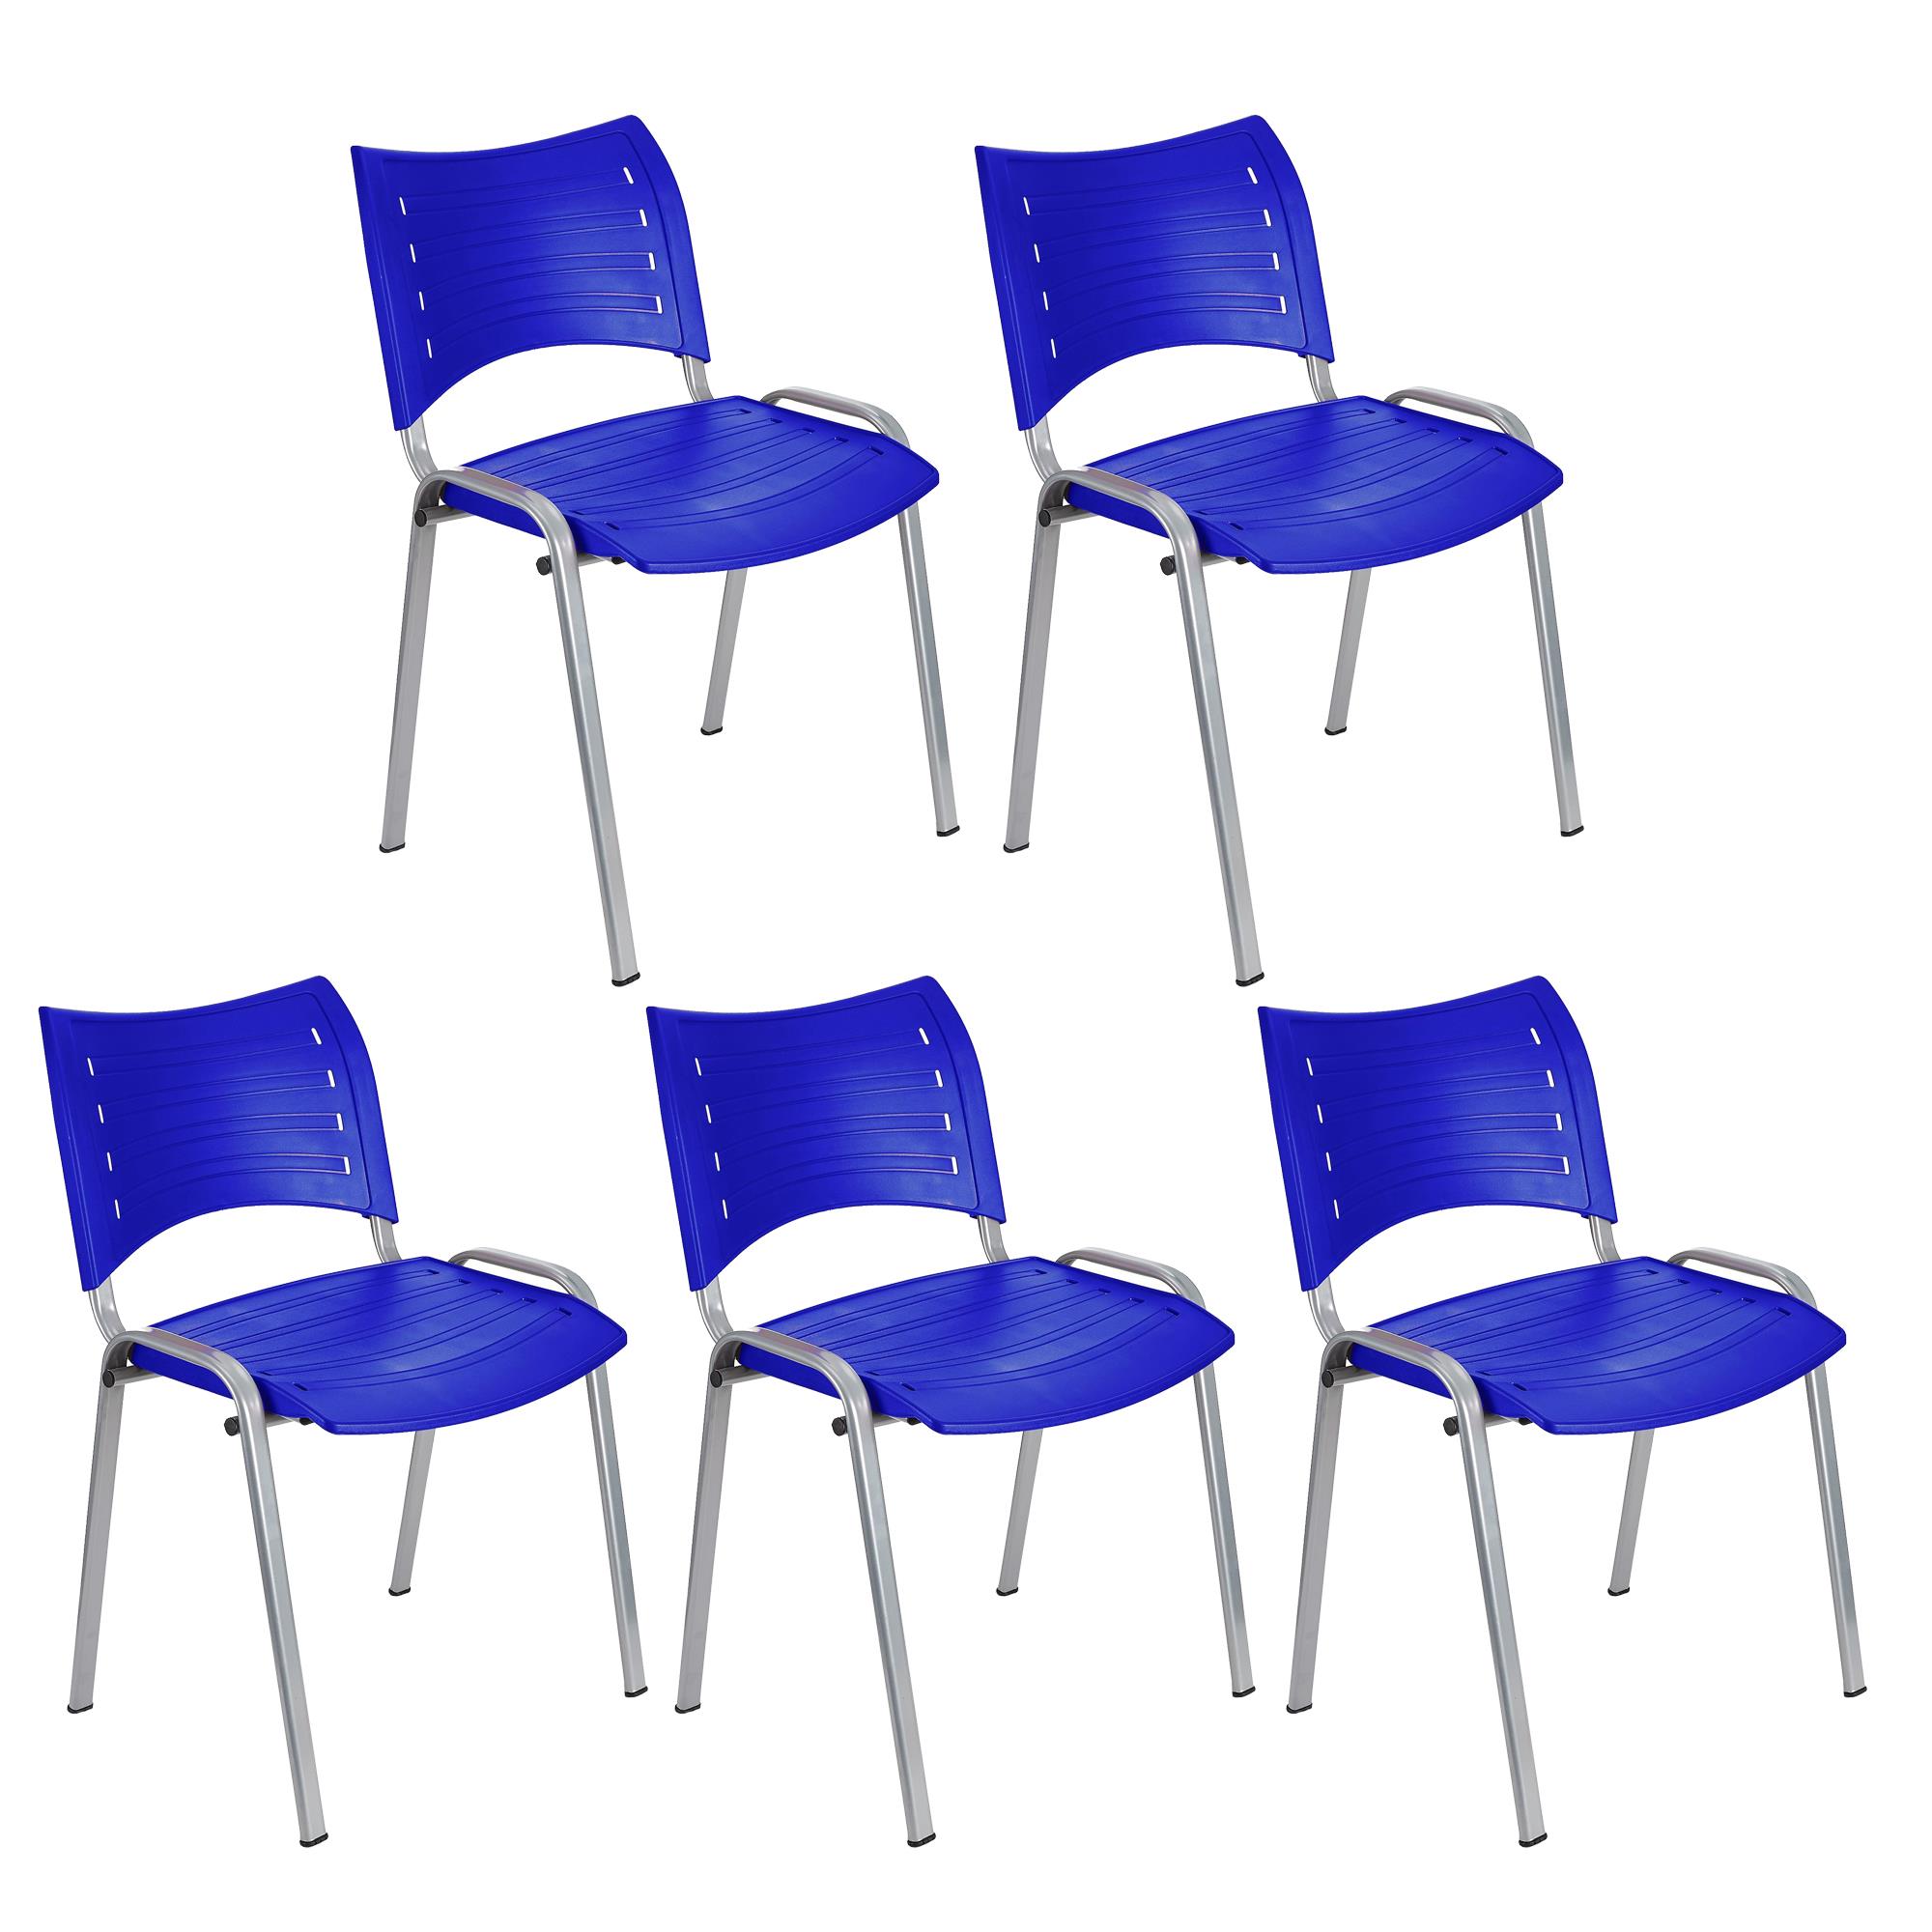 Lote 5 Cadeiras de Visita ELVA, Confortável e Prática, Pernas Cinza, Cor Azul